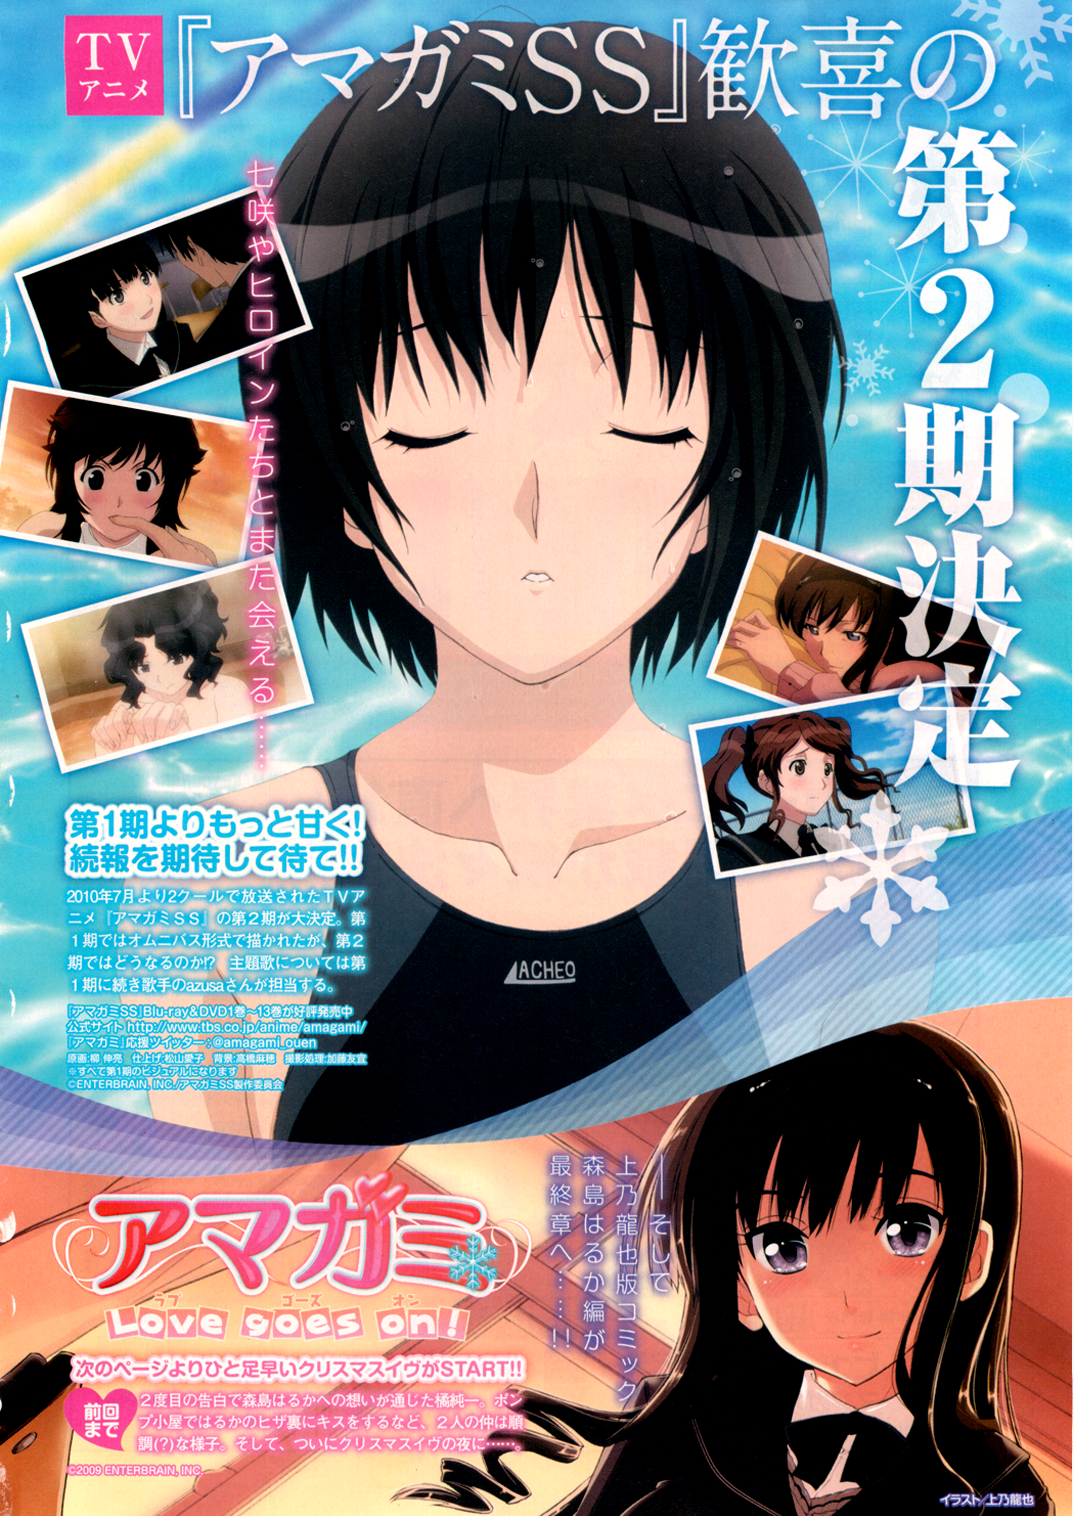 Amagami - Love Goes On! Vol.2 Chapter 10: Morishima Haruka - Part 6 - Picture 2